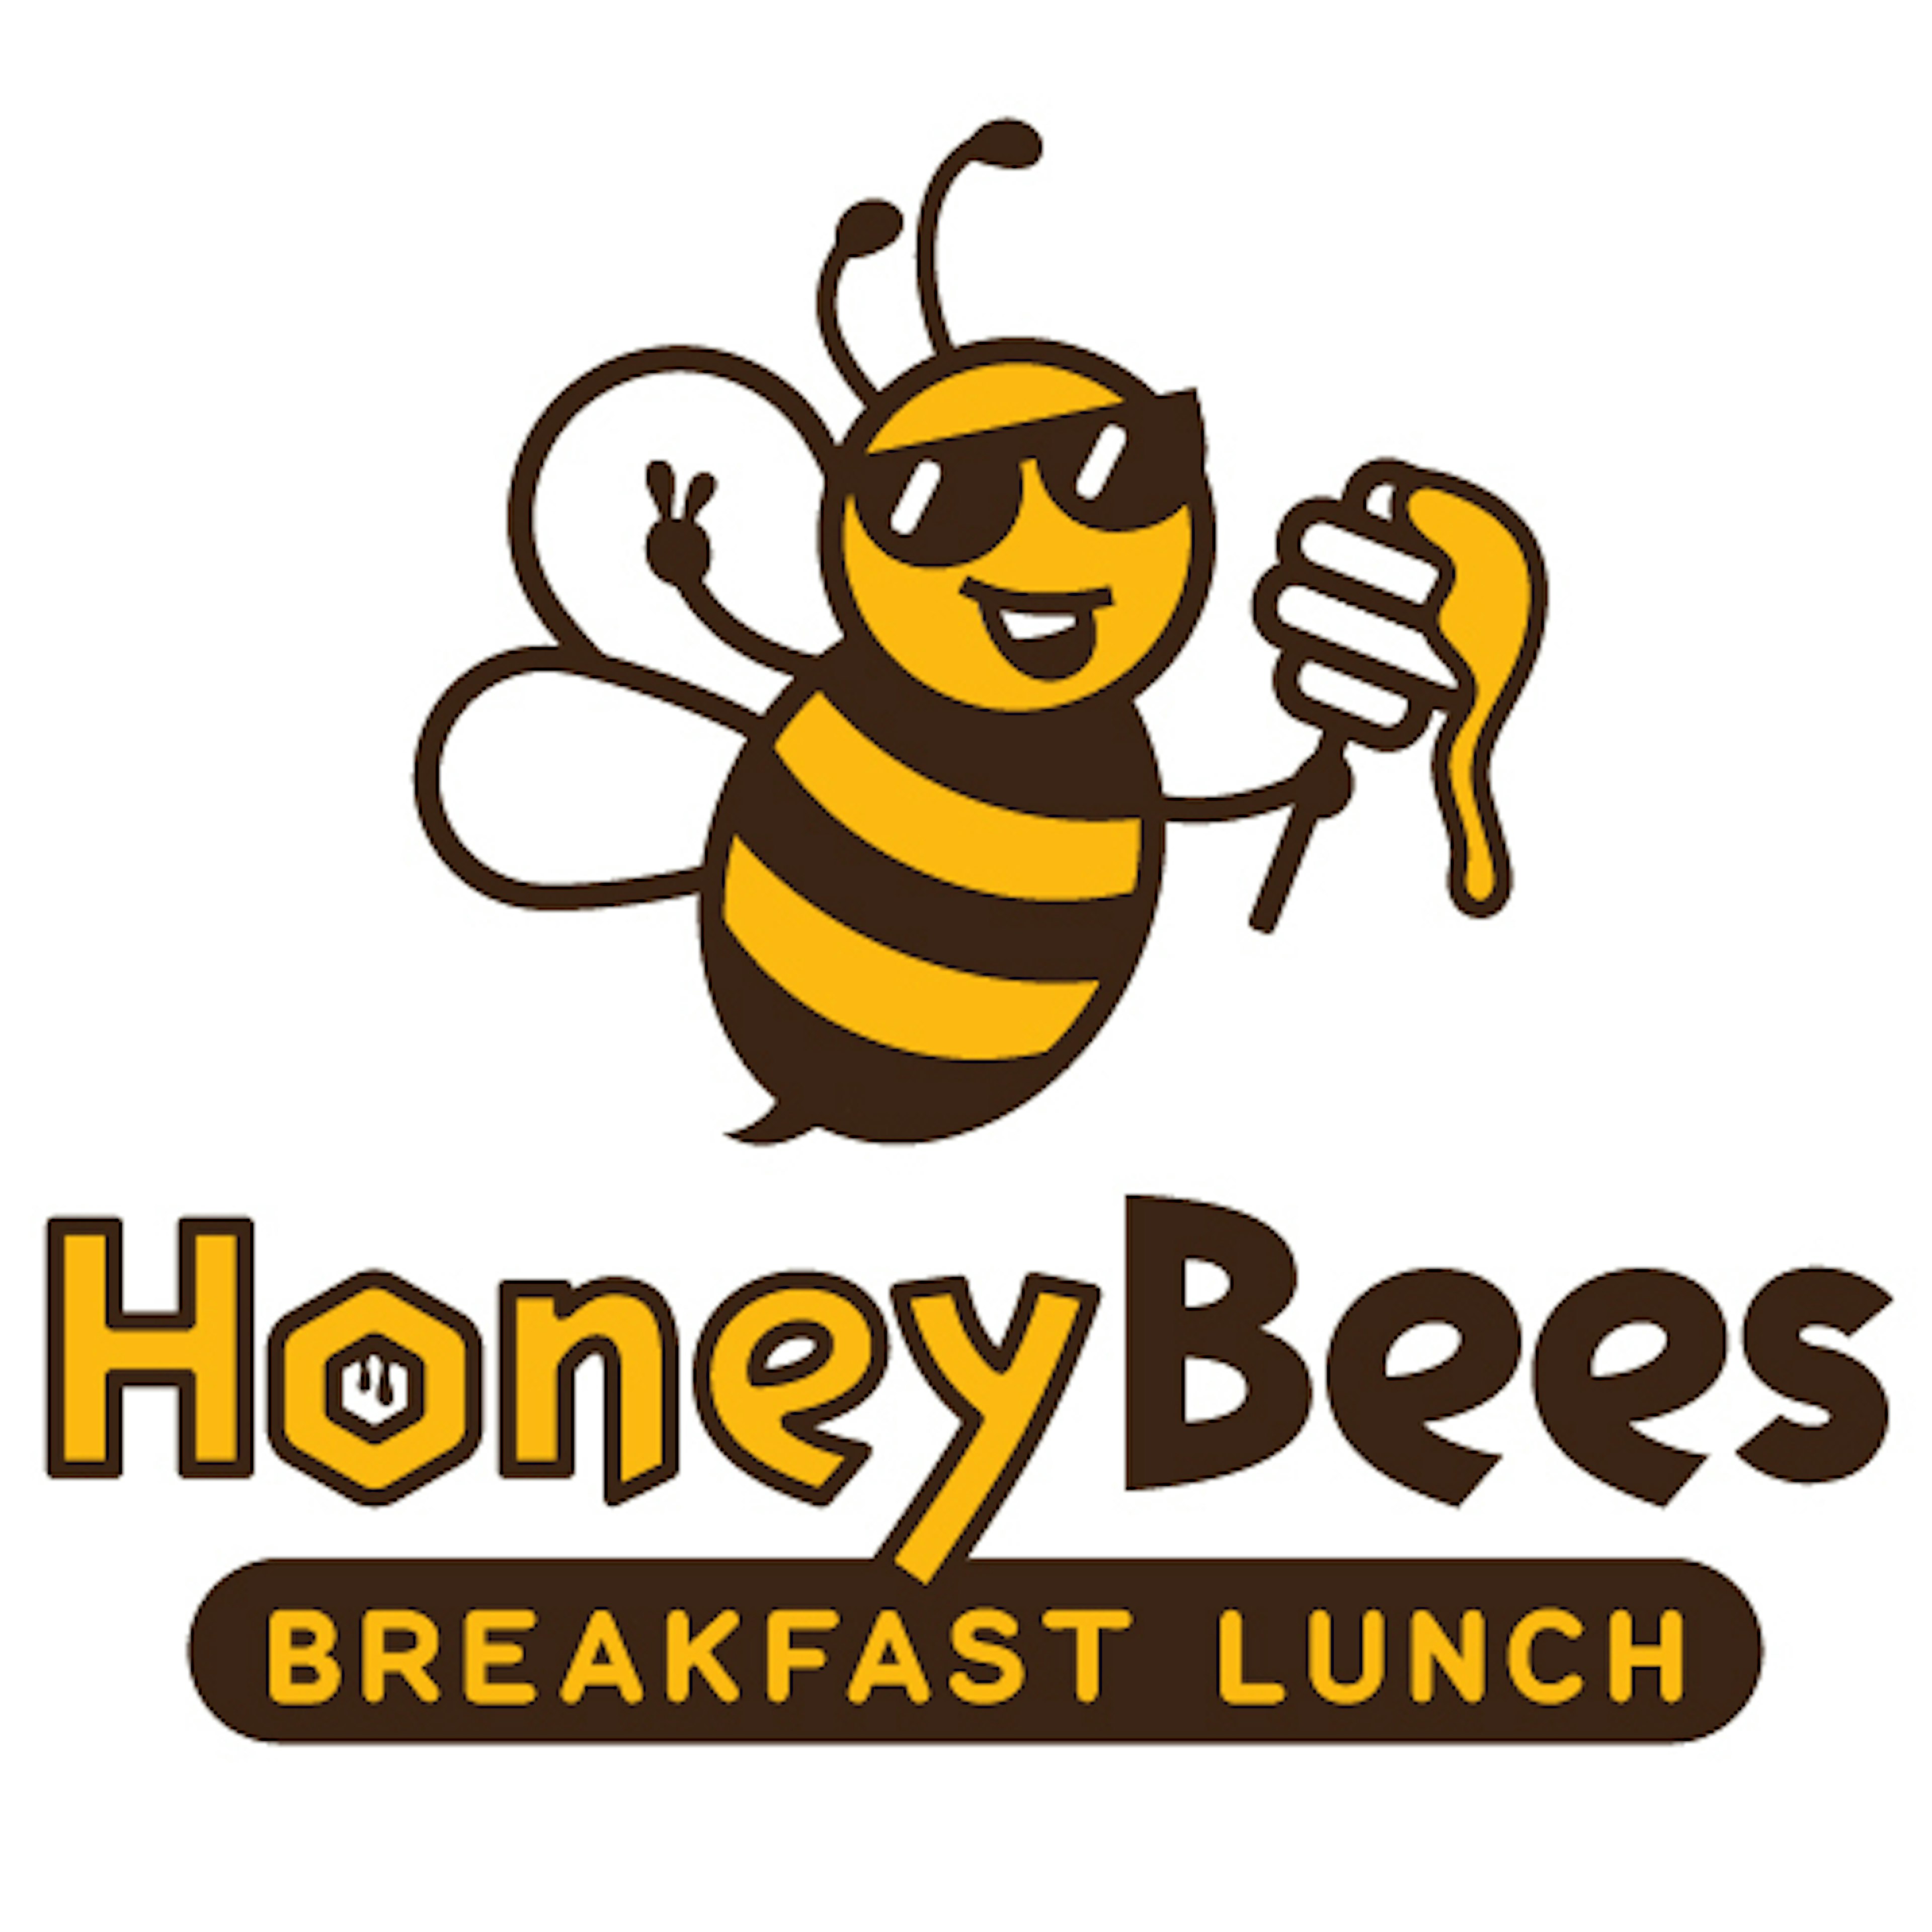 Honey Bees Breakfast & Lunch